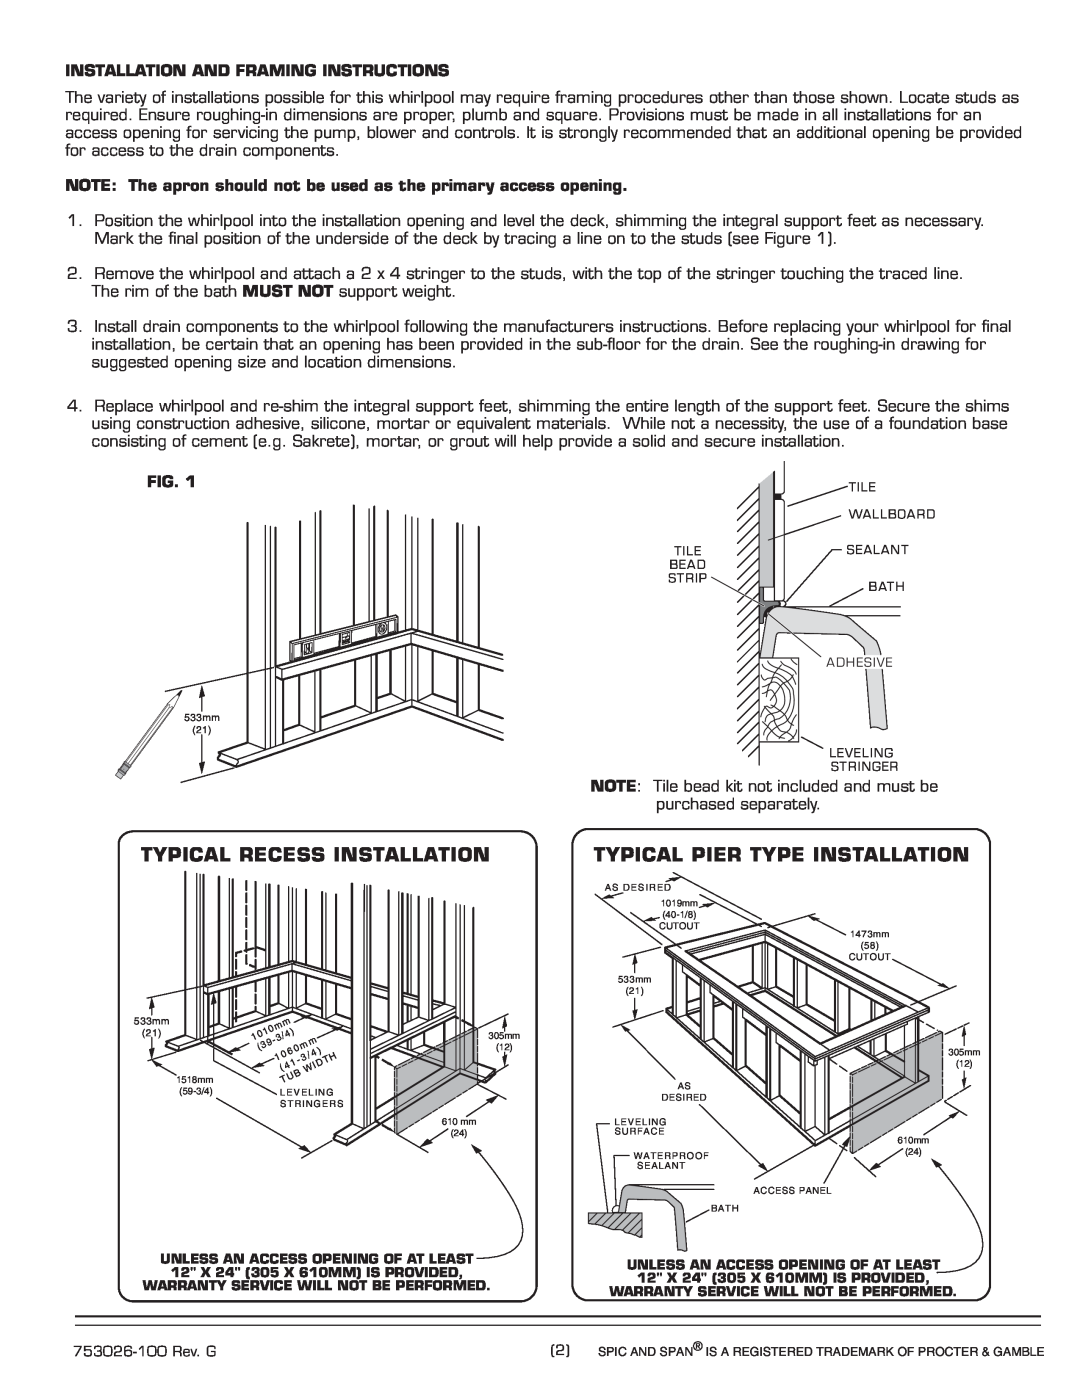 American Standard 2748.XXXW installation instructions Typical Recess Installation, Typical Pier Type Installation 